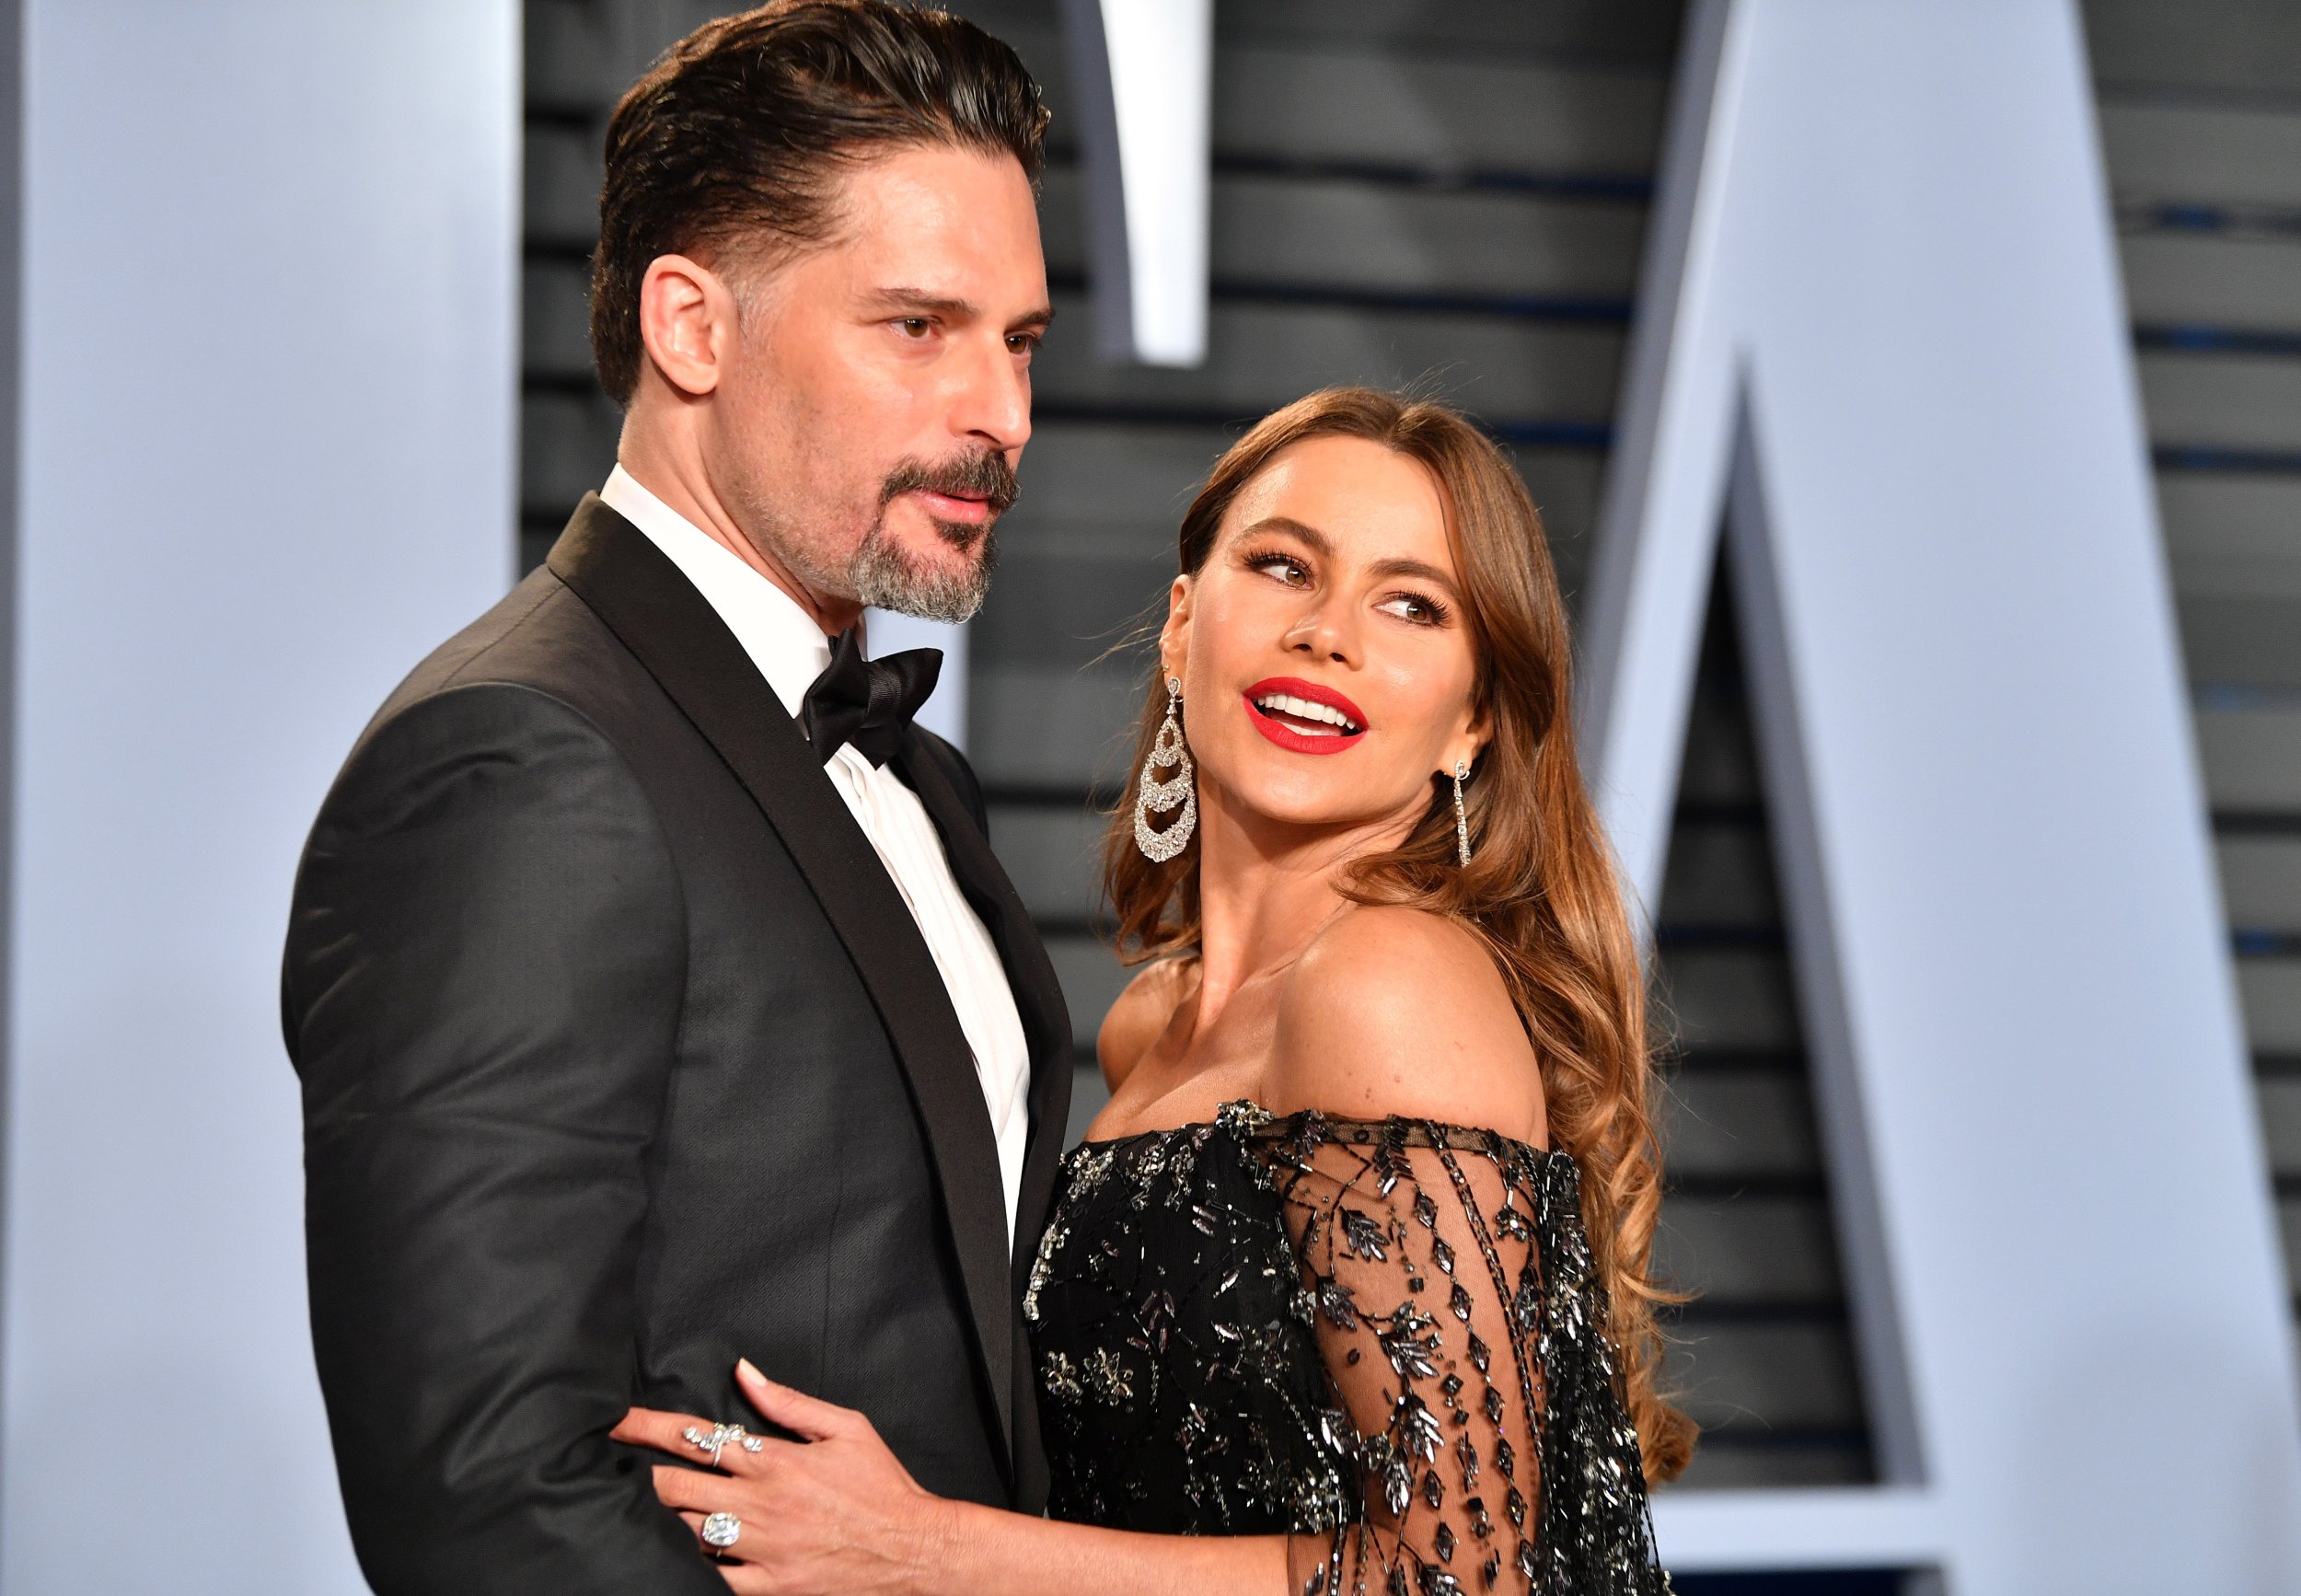 Sofia Vergara's Husband Joe Manganiello Sparks Divorce Rumor Over